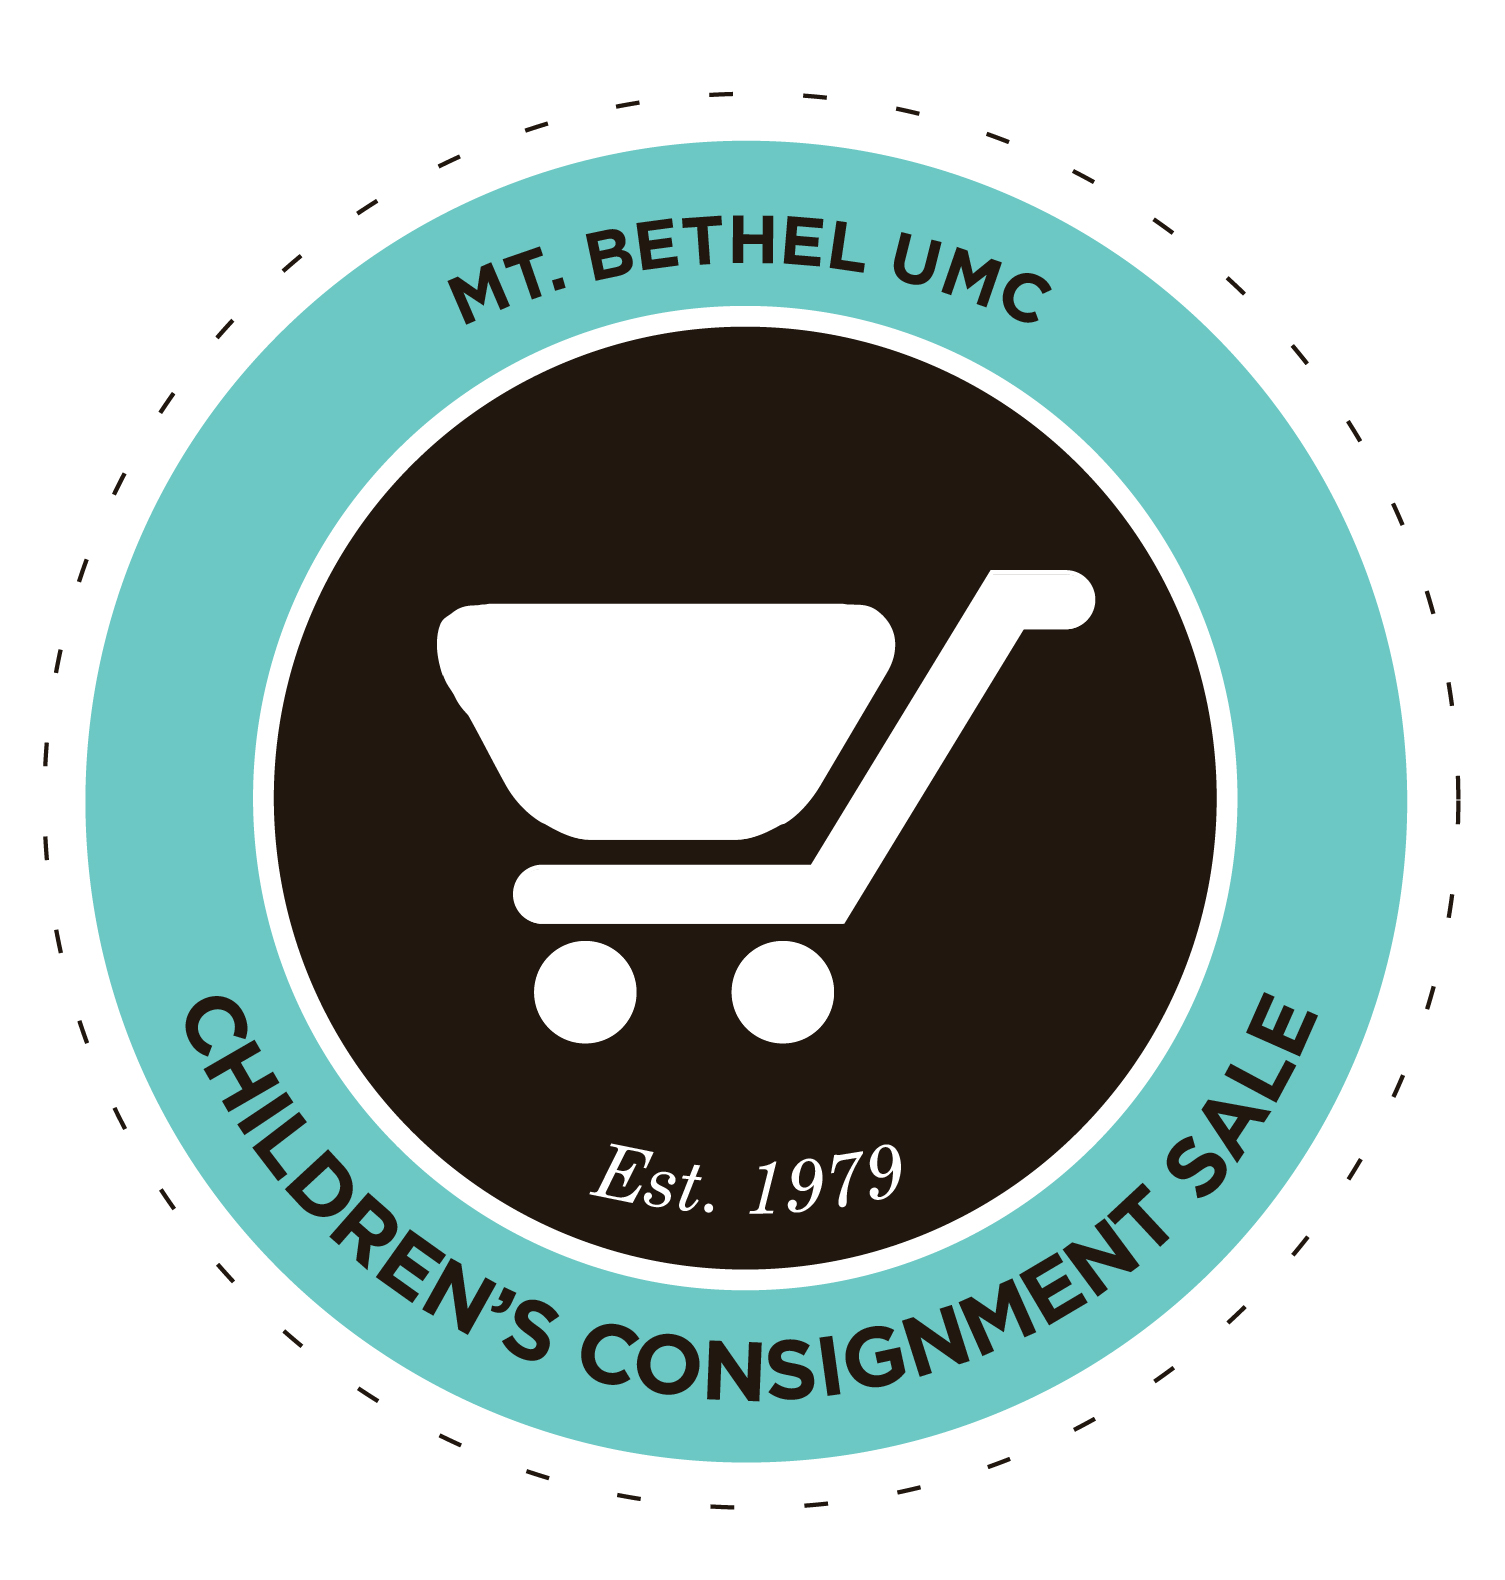 Mt. Bethel UMC Children's Consignment Sale